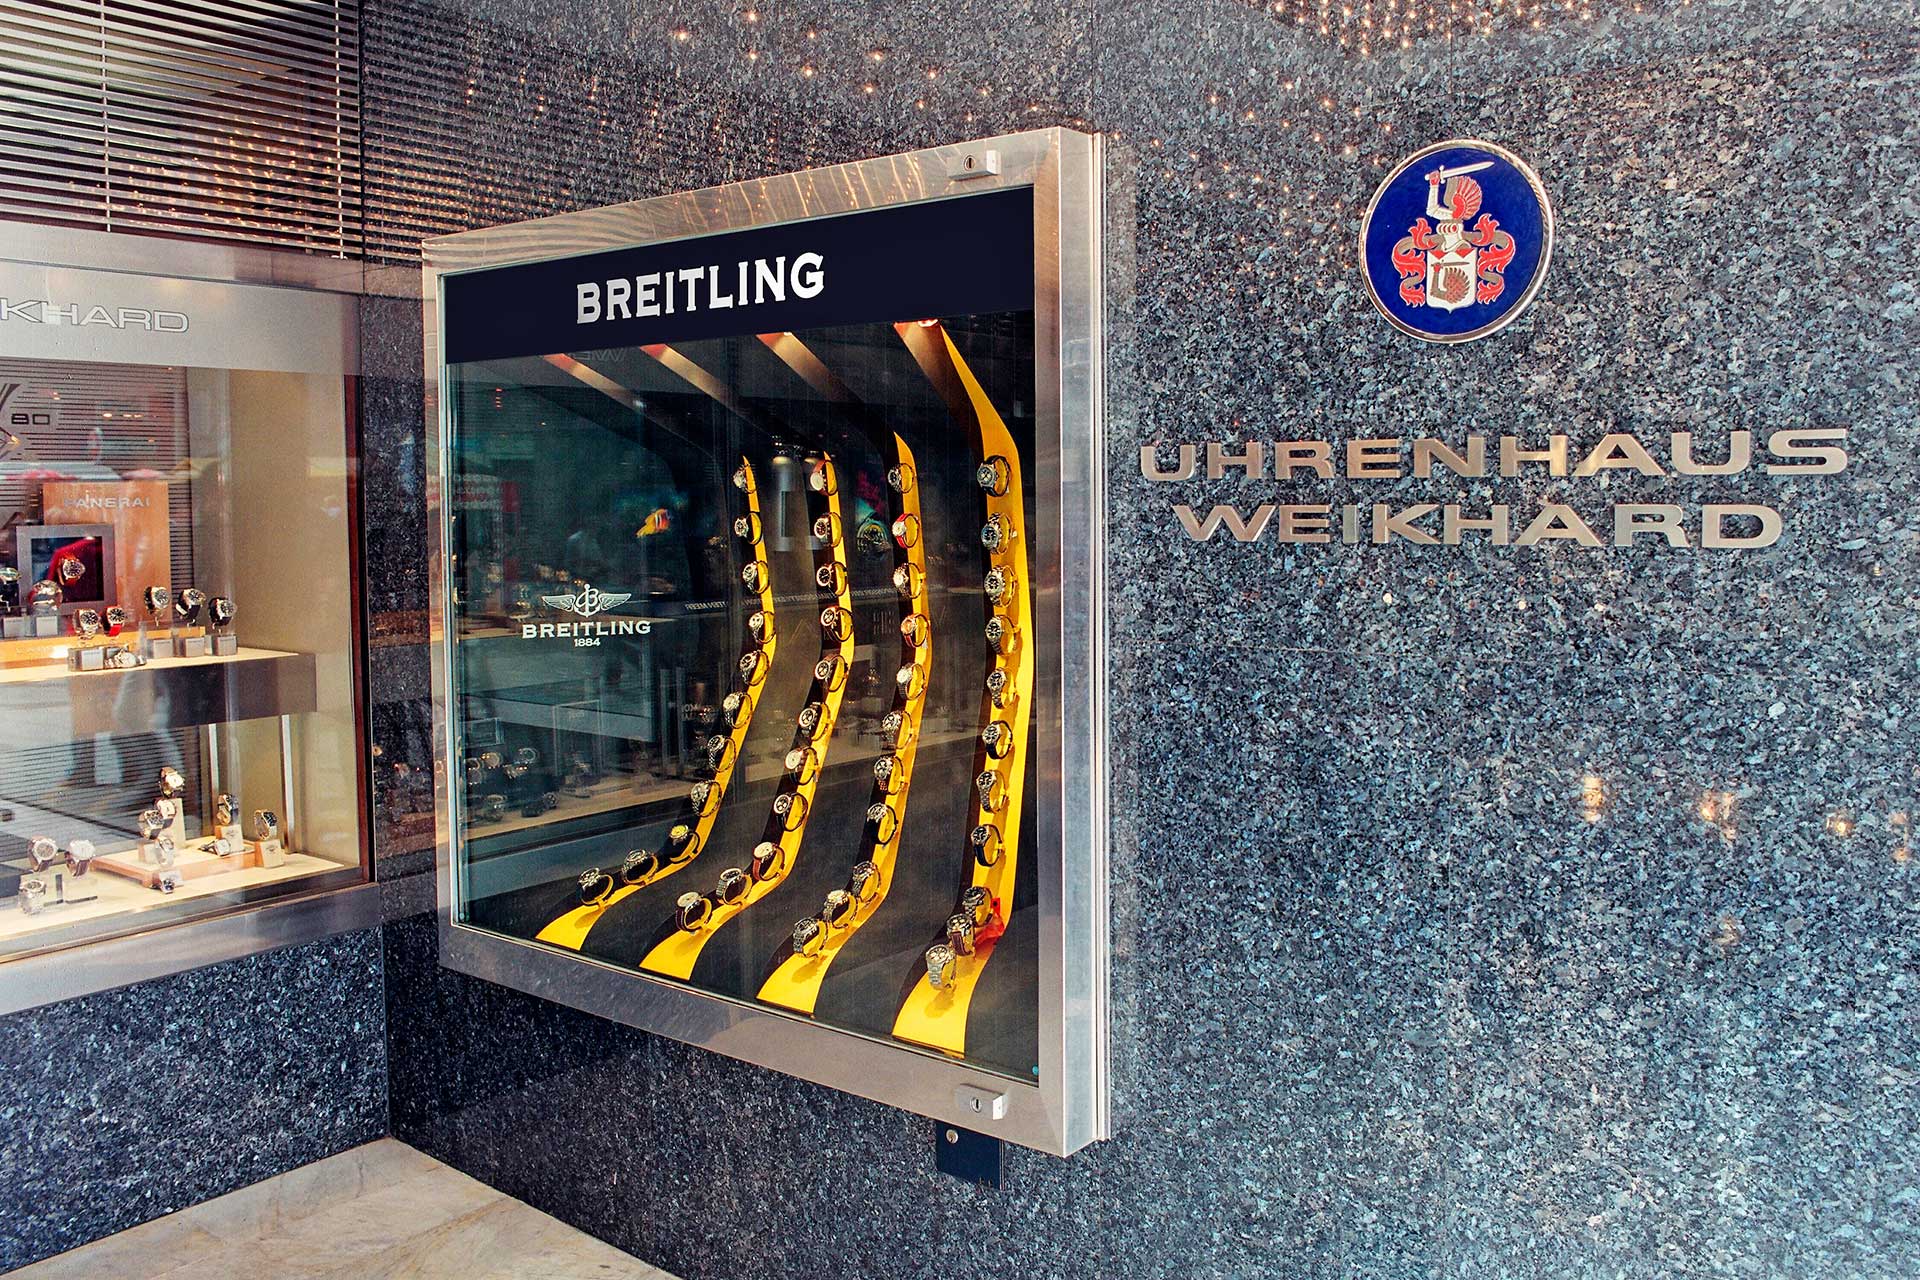 2004 - Uhrenhaus WEIKHARD - Breitling Vitrine, A-8010 Graz